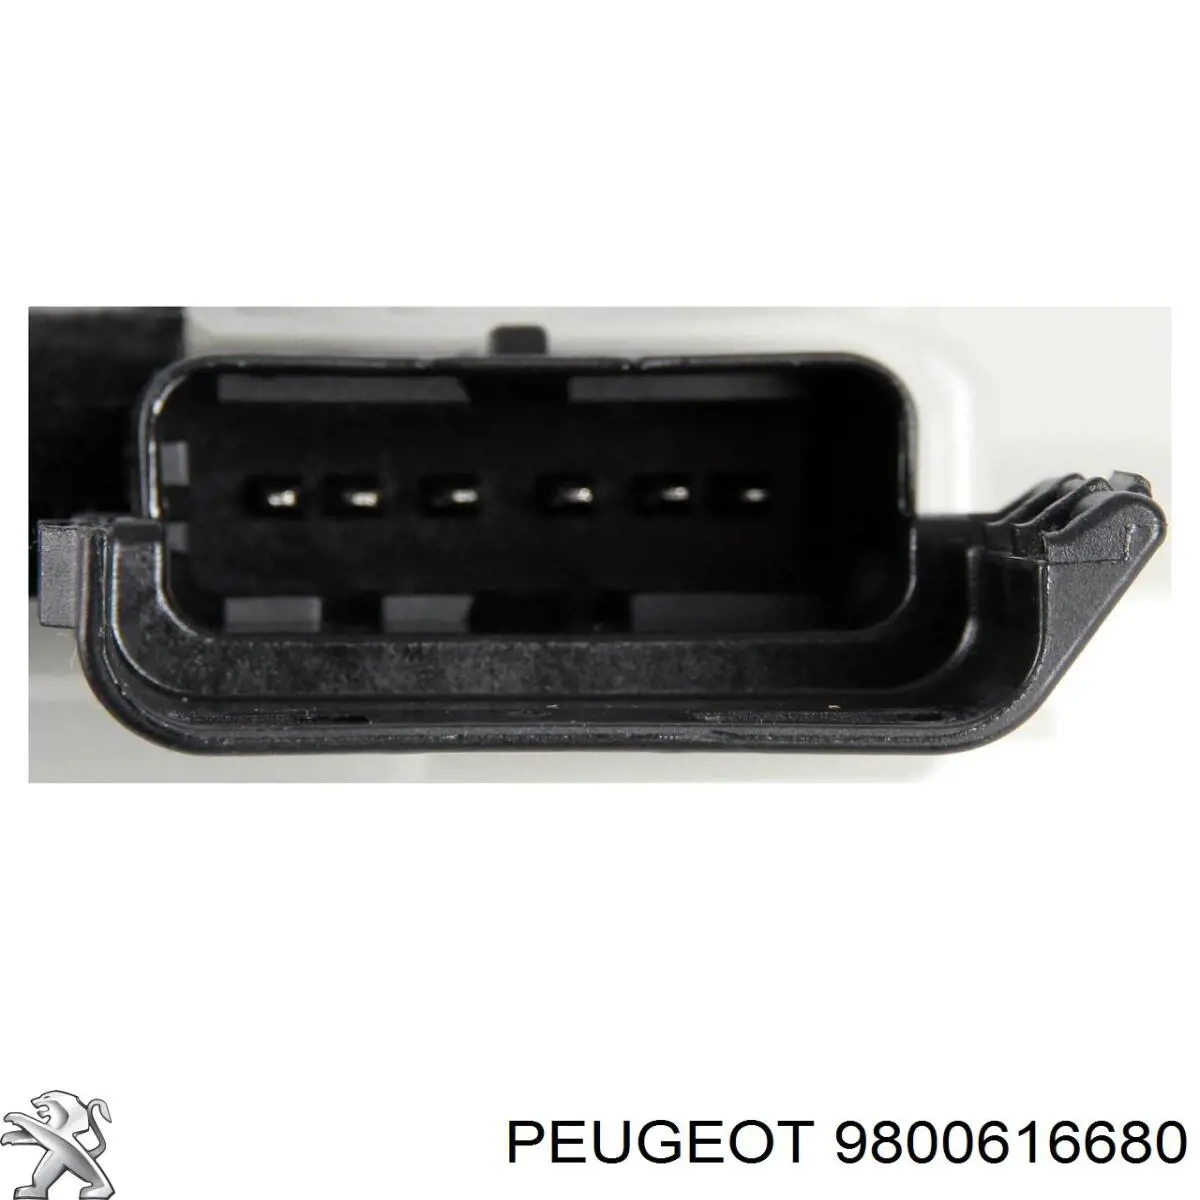 9800616680 Peugeot/Citroen cerradura de puerta delantera izquierda